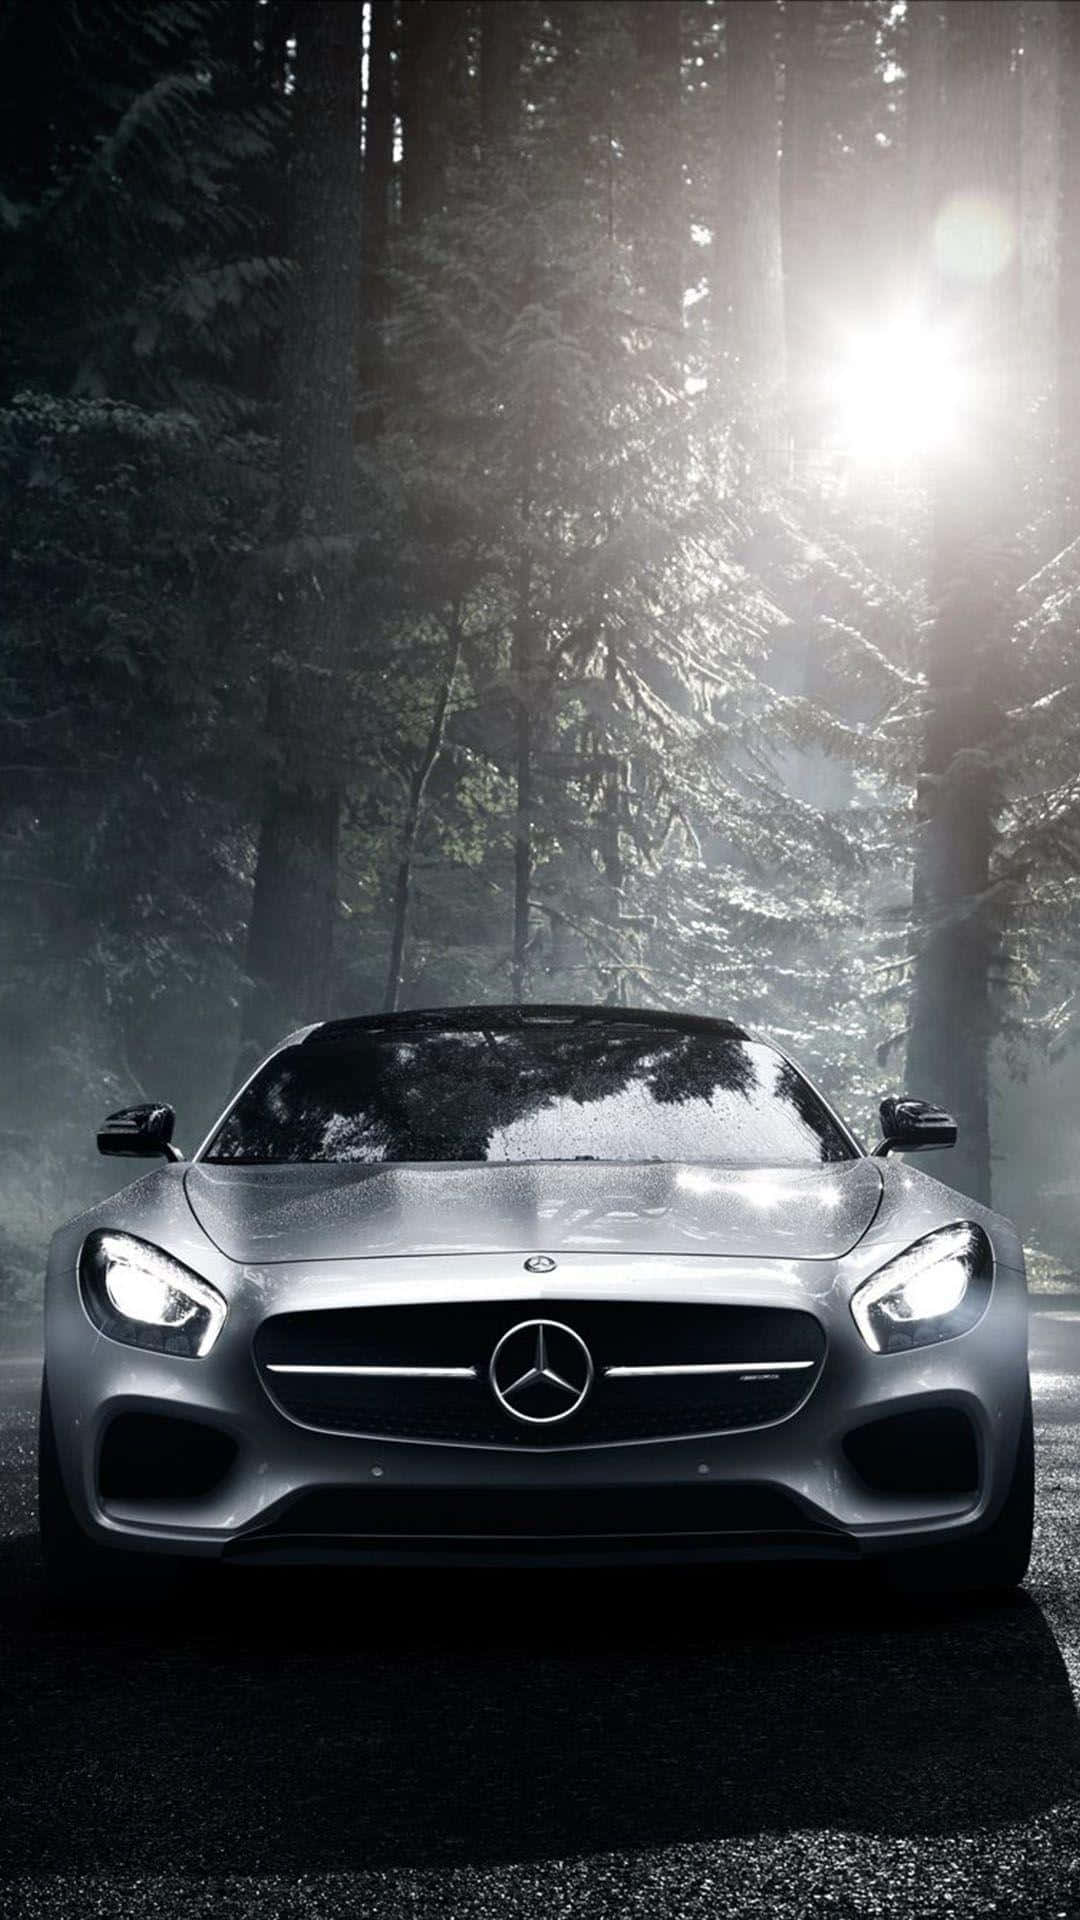 Bilddas Elegante Design Des Mercedes Benz Telefons Wallpaper